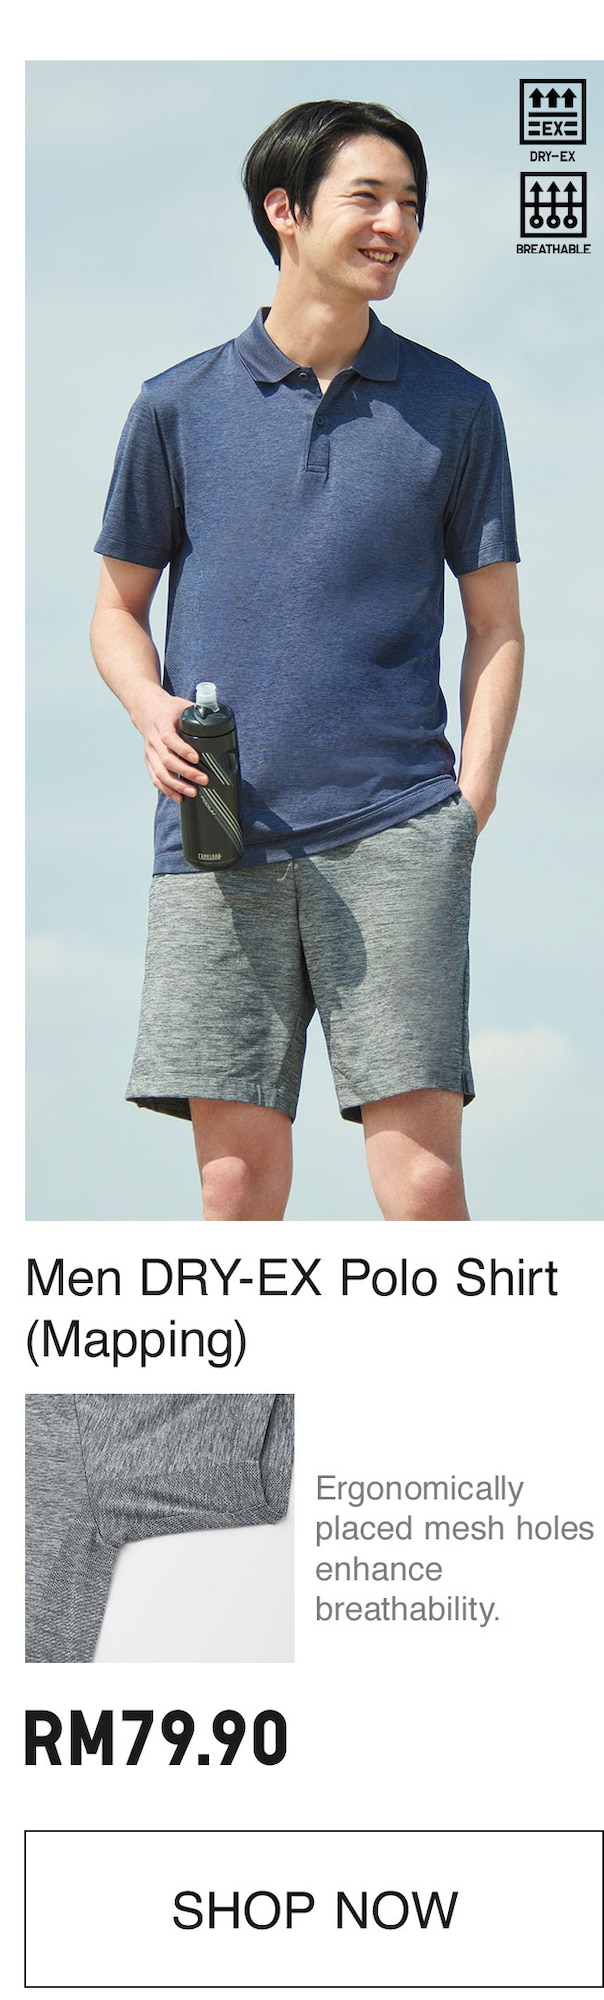 MEN DRY-EX POLO